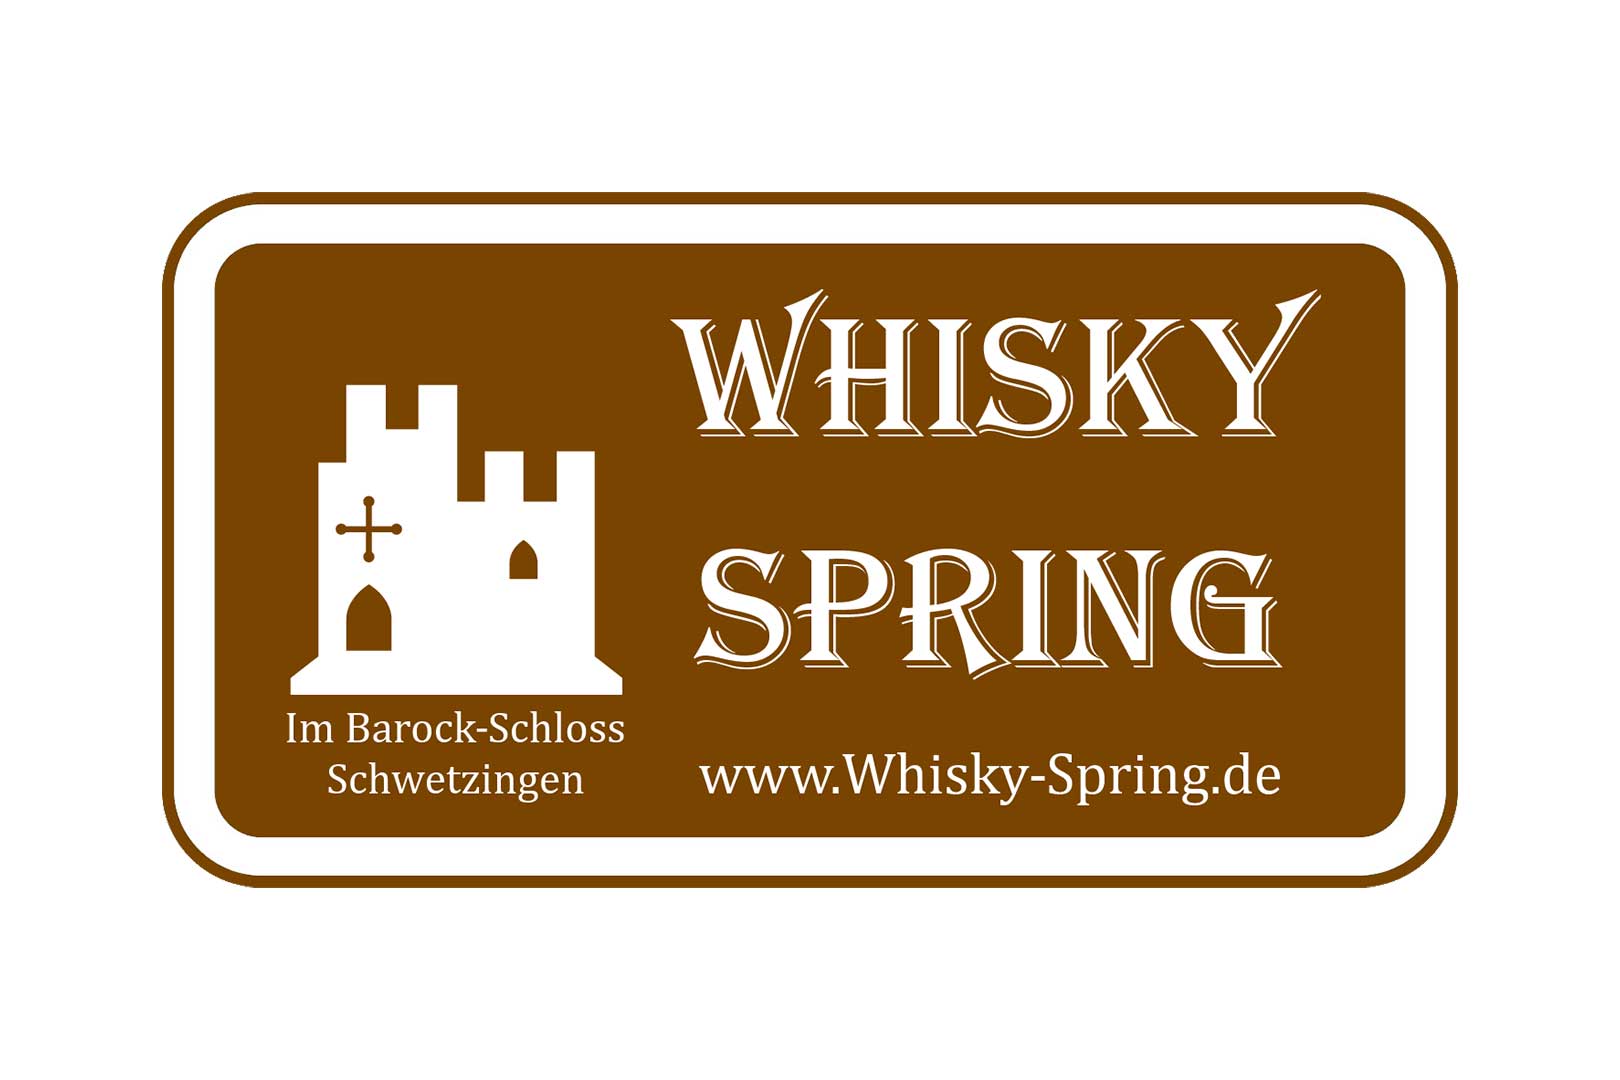 whisky event whisky spring schwetzingen WEB 3 2 1620x1080 wsdfvqlwqlfa